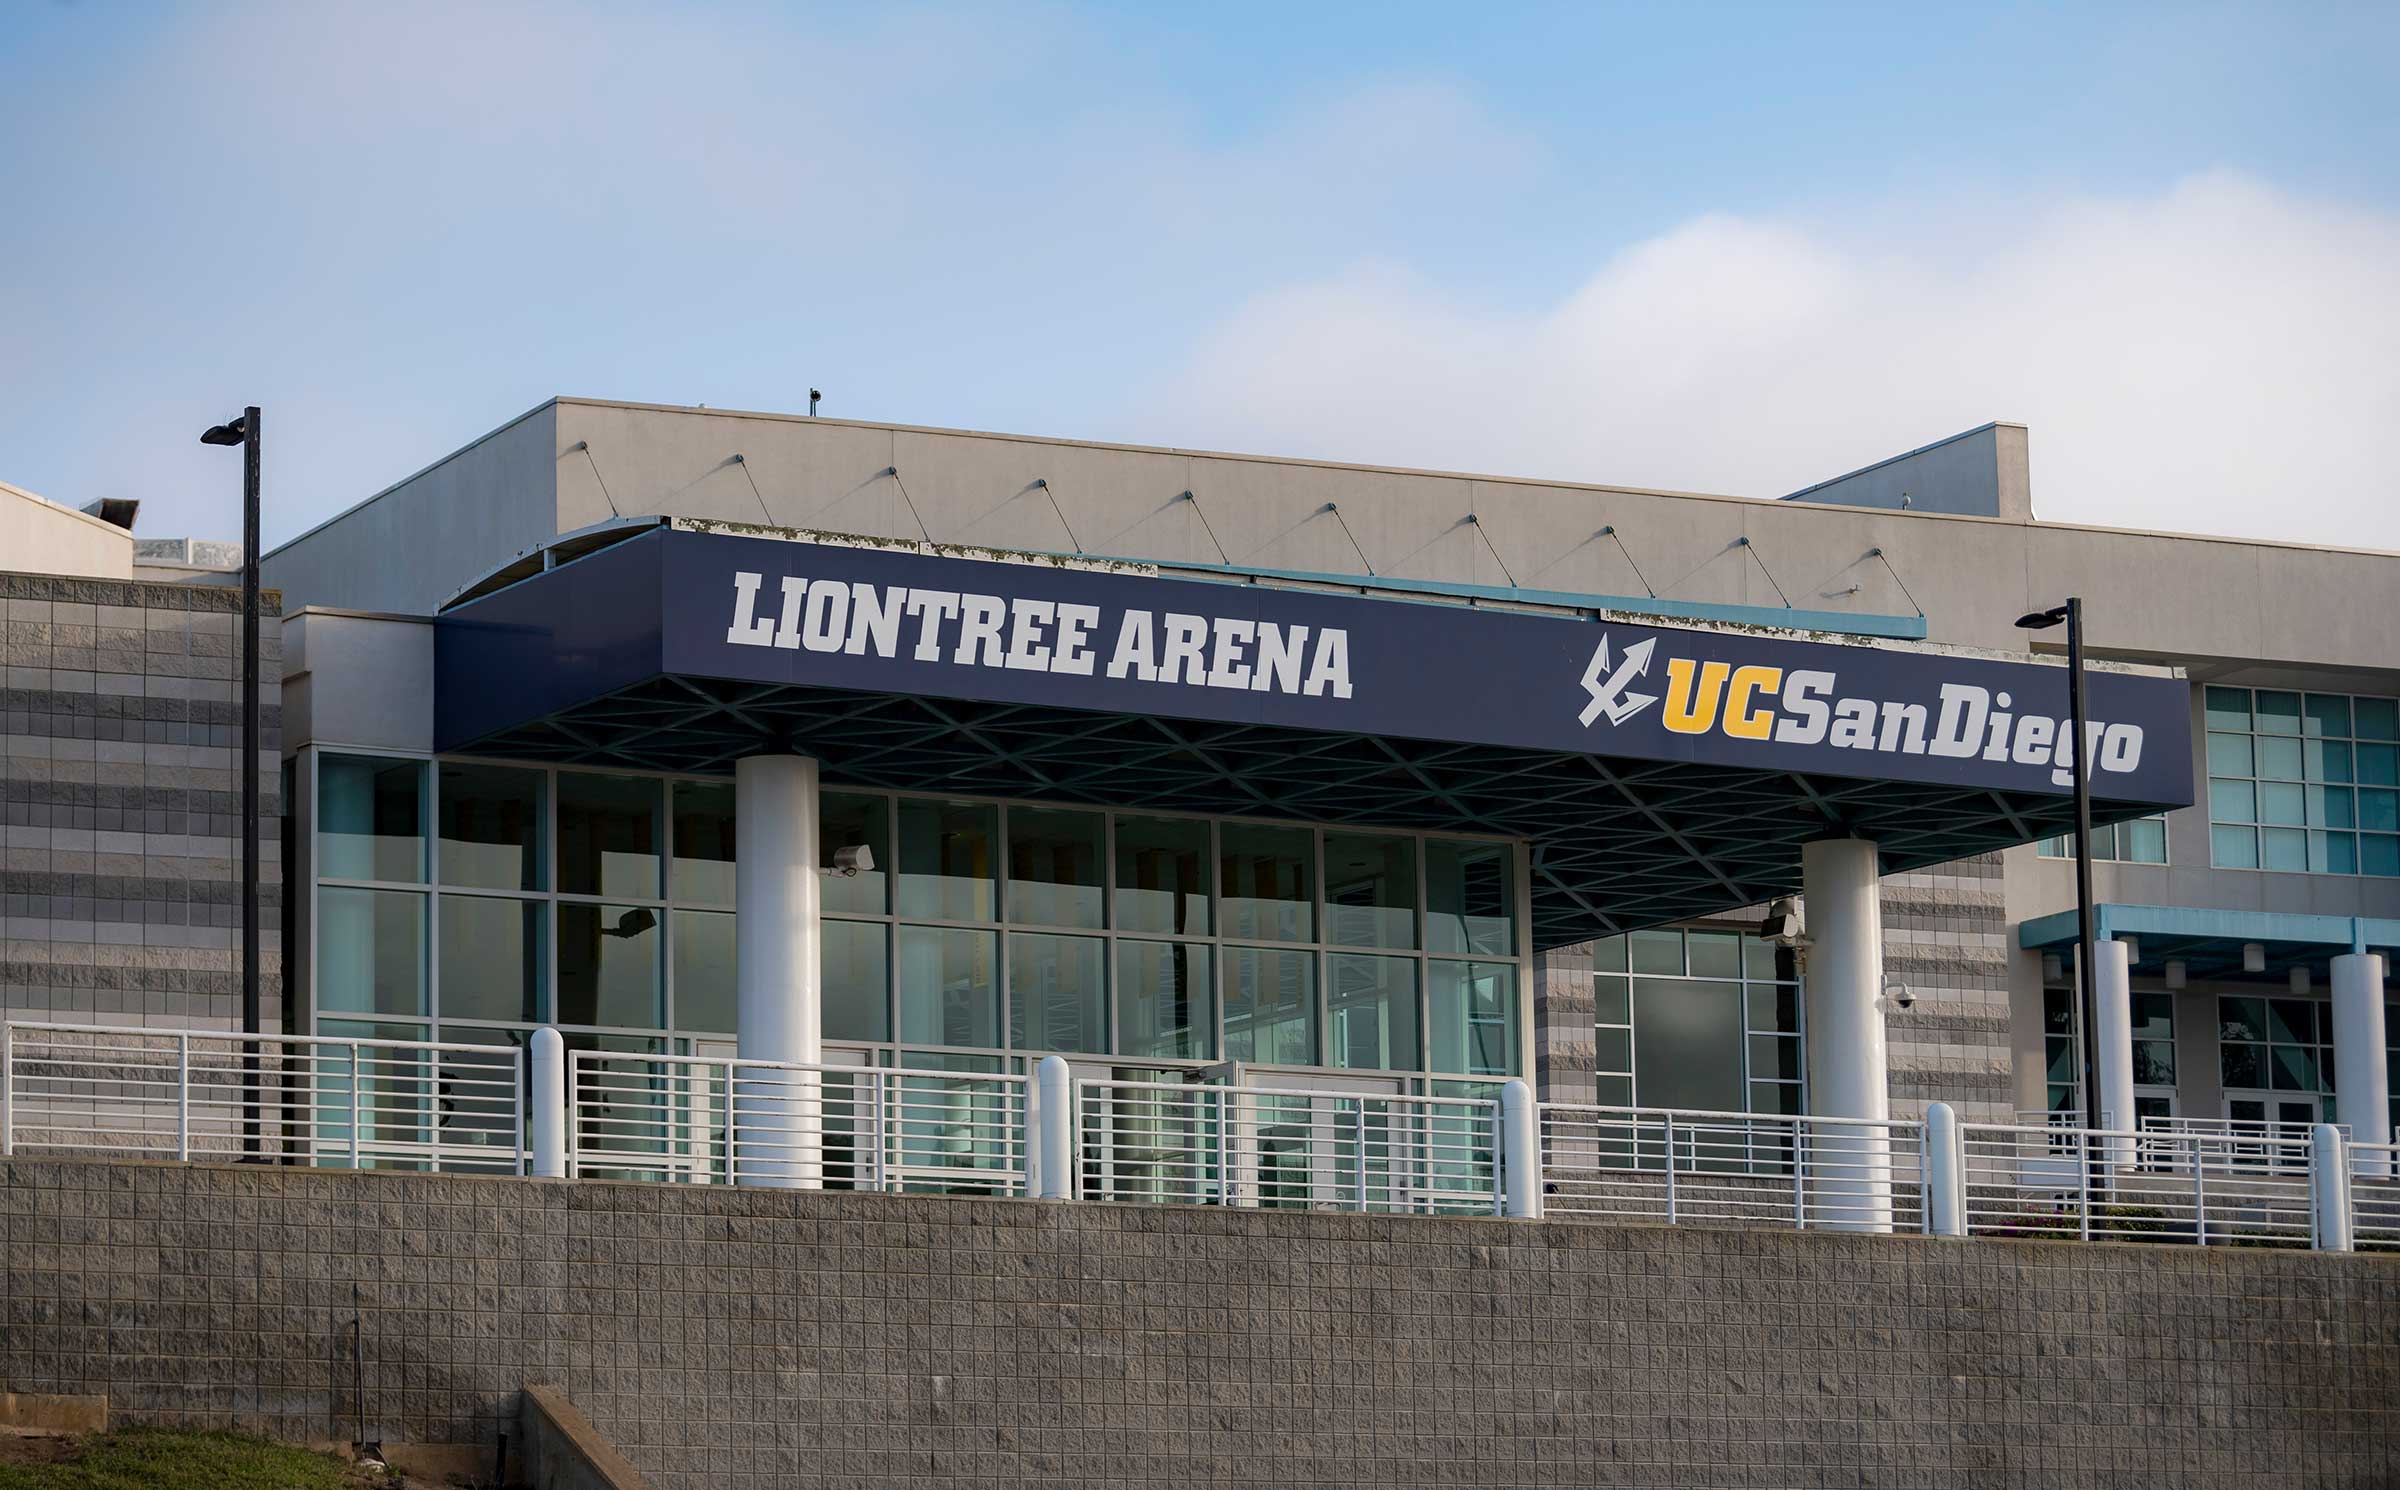 LionTree Arena exterior.